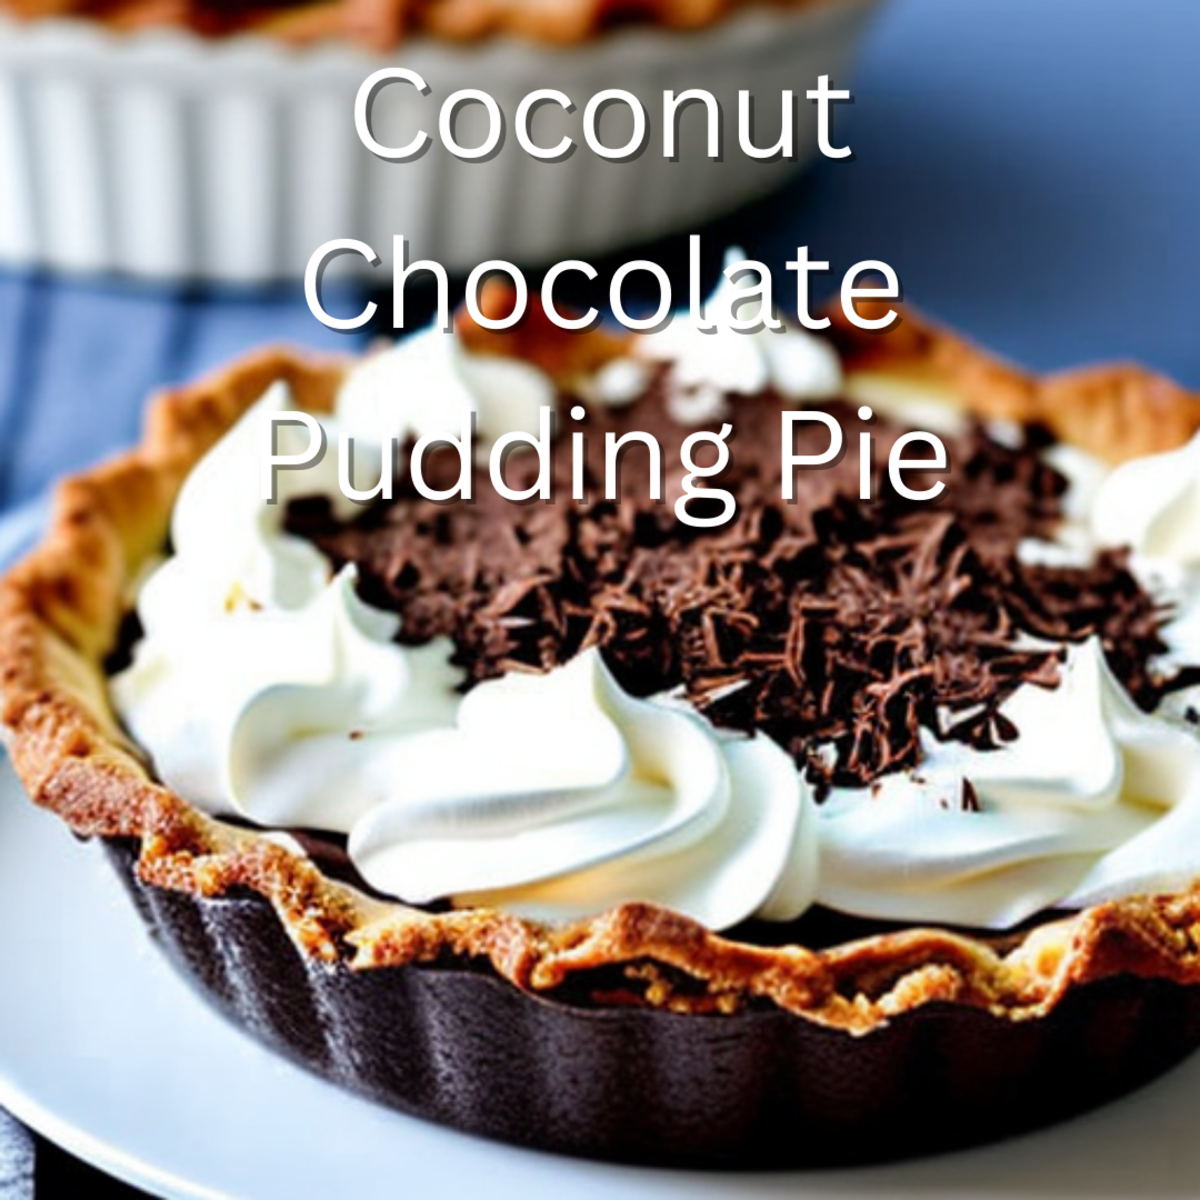 Coconut Chocolate Pudding Pie